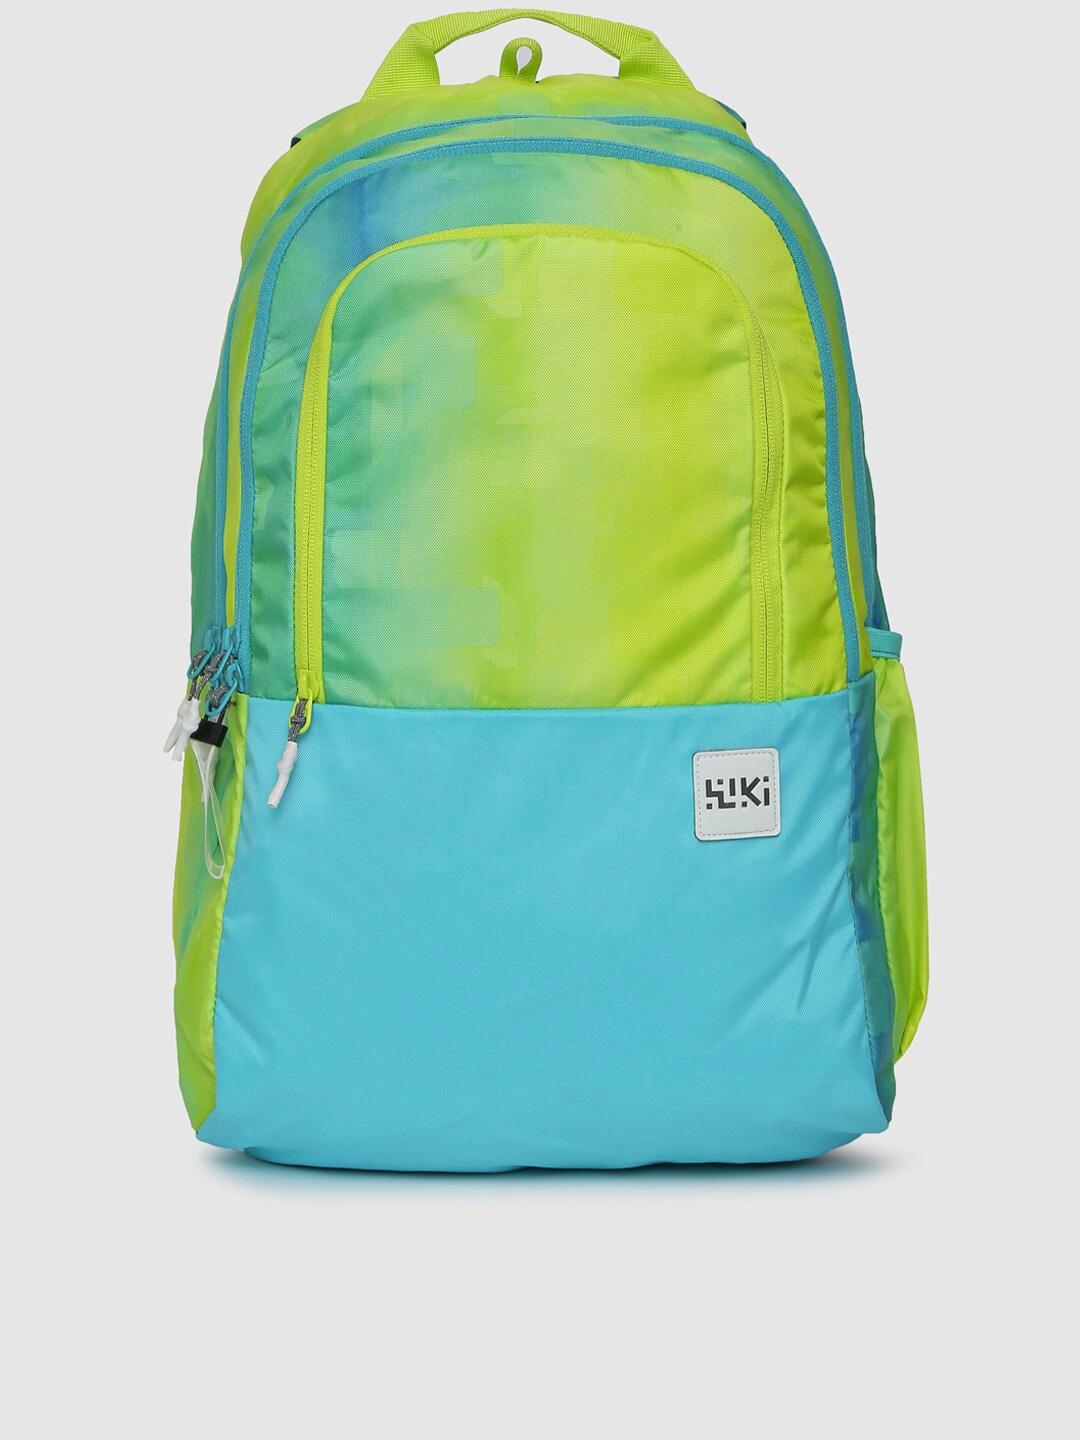 Wildcraft Unisex Blue & Green Colourblocked Backpack